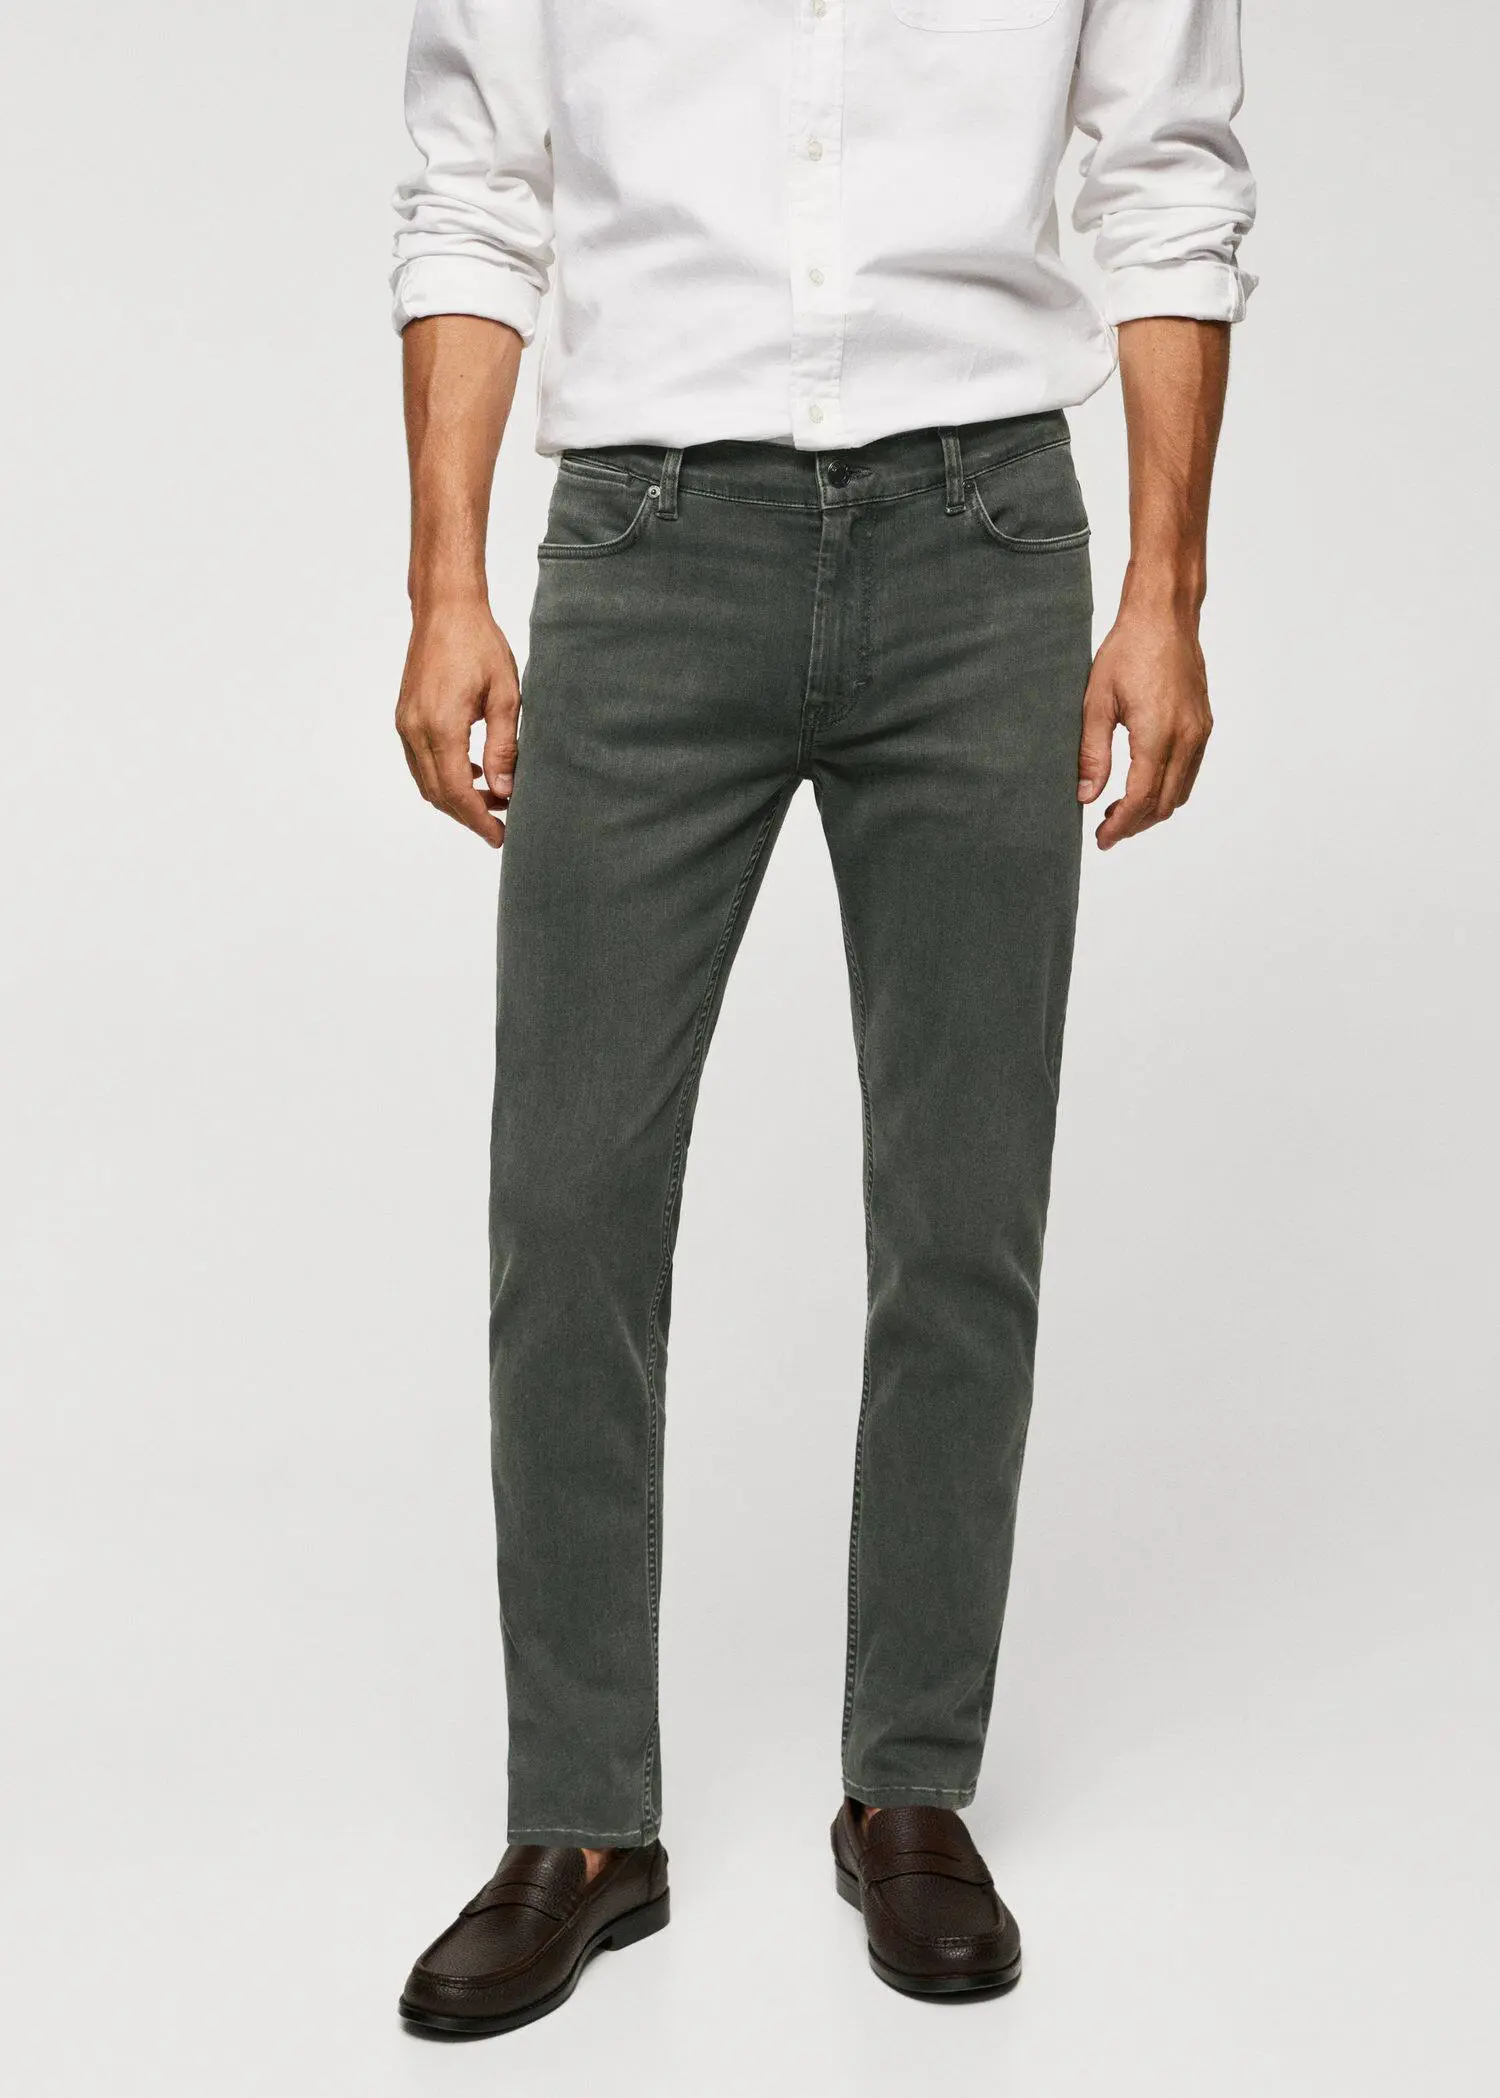 Mango Slim fit Ultra Soft Touch Patrick jeans. 2